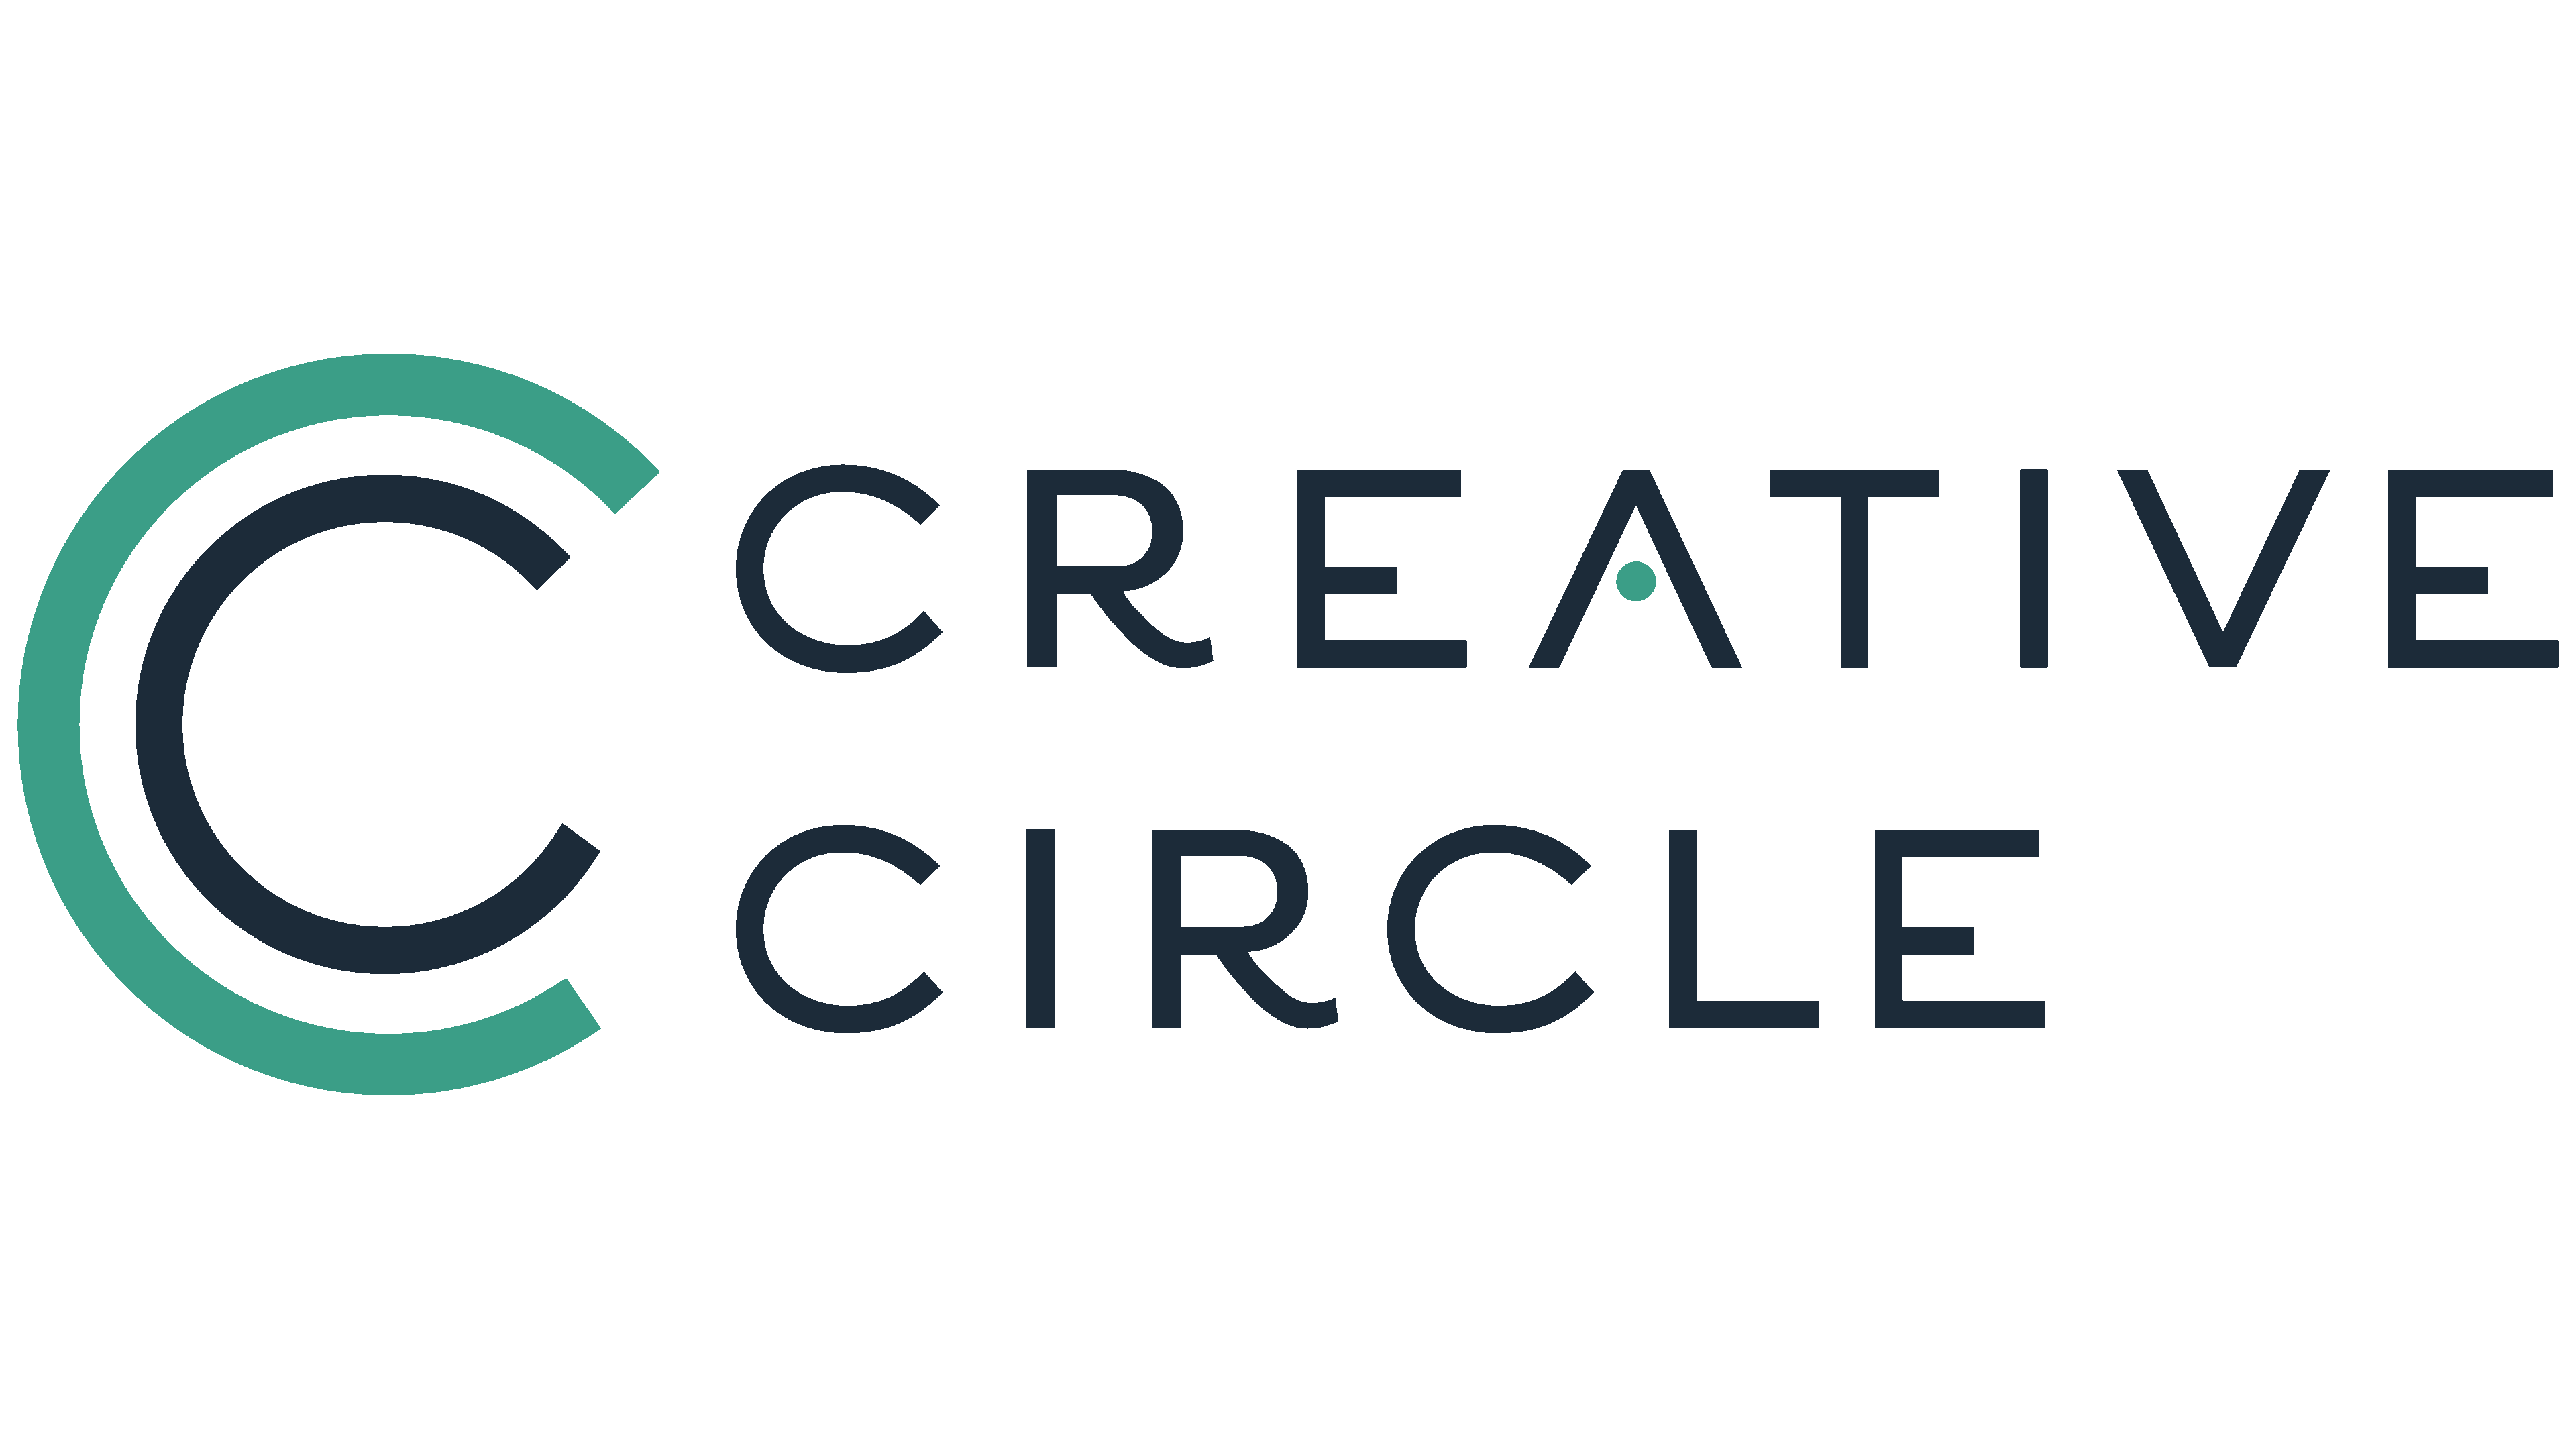 Creative Circle helps you appreciate creativity at work